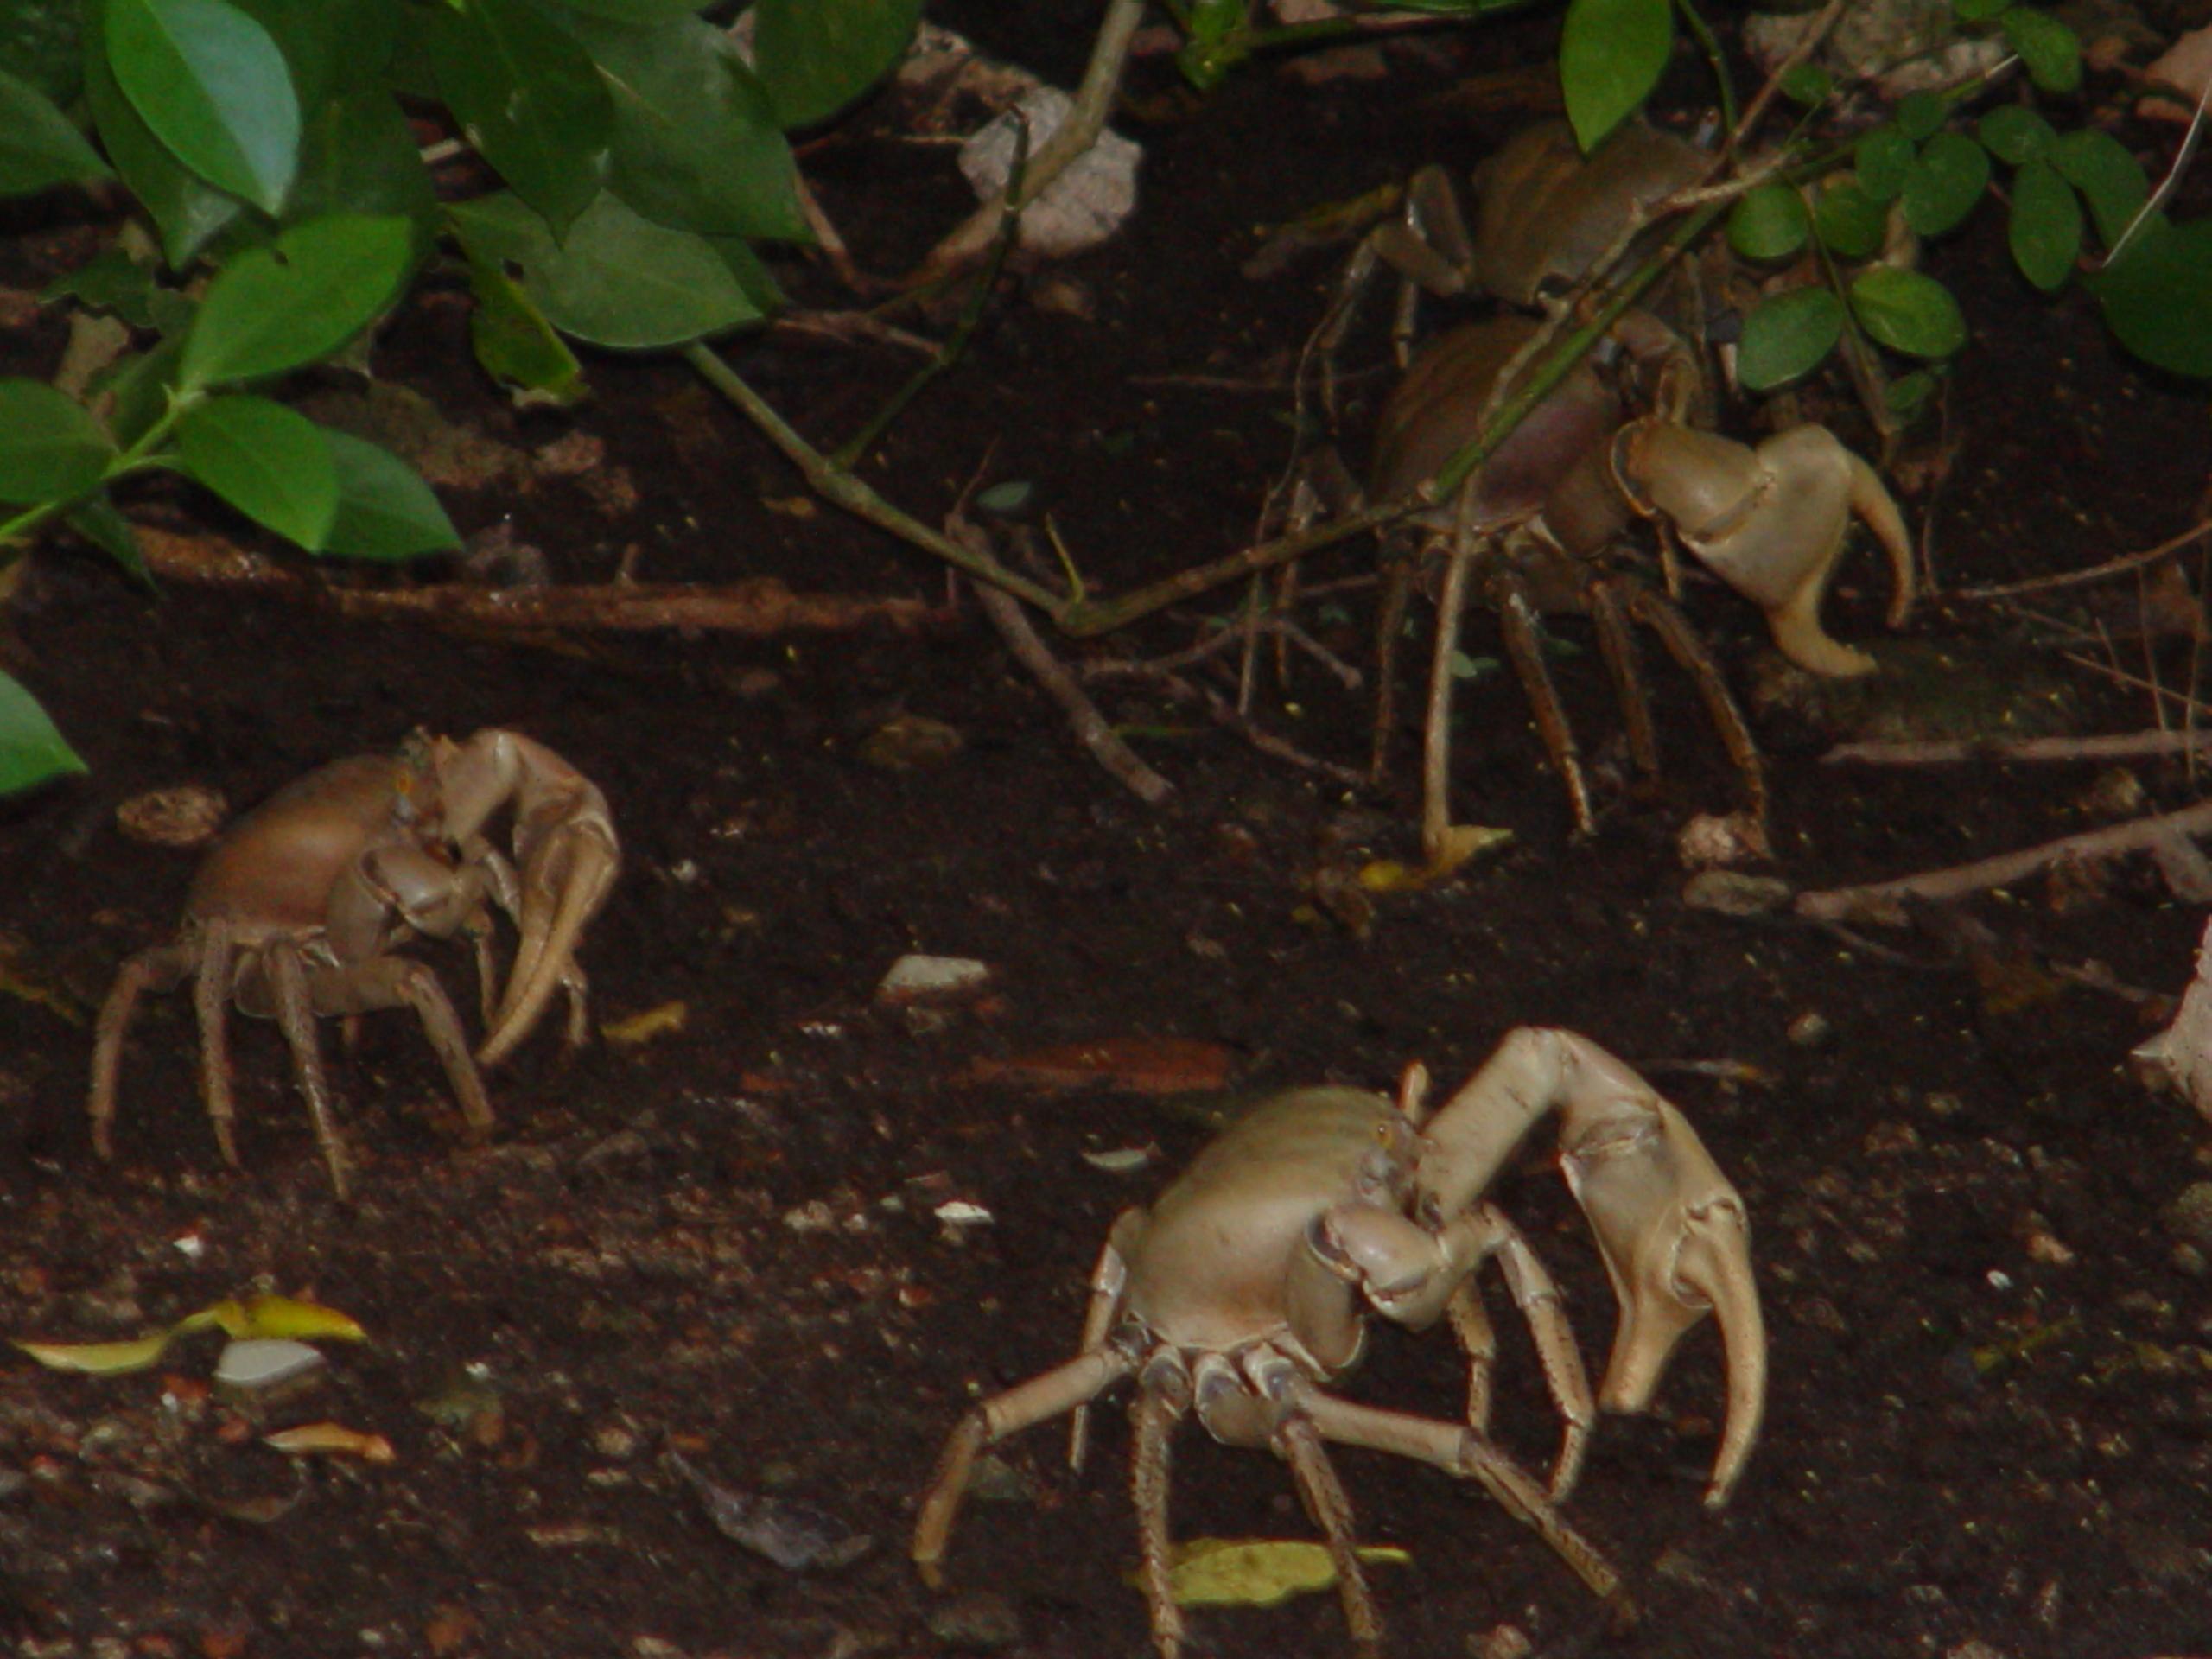 Crabs of Cozumel